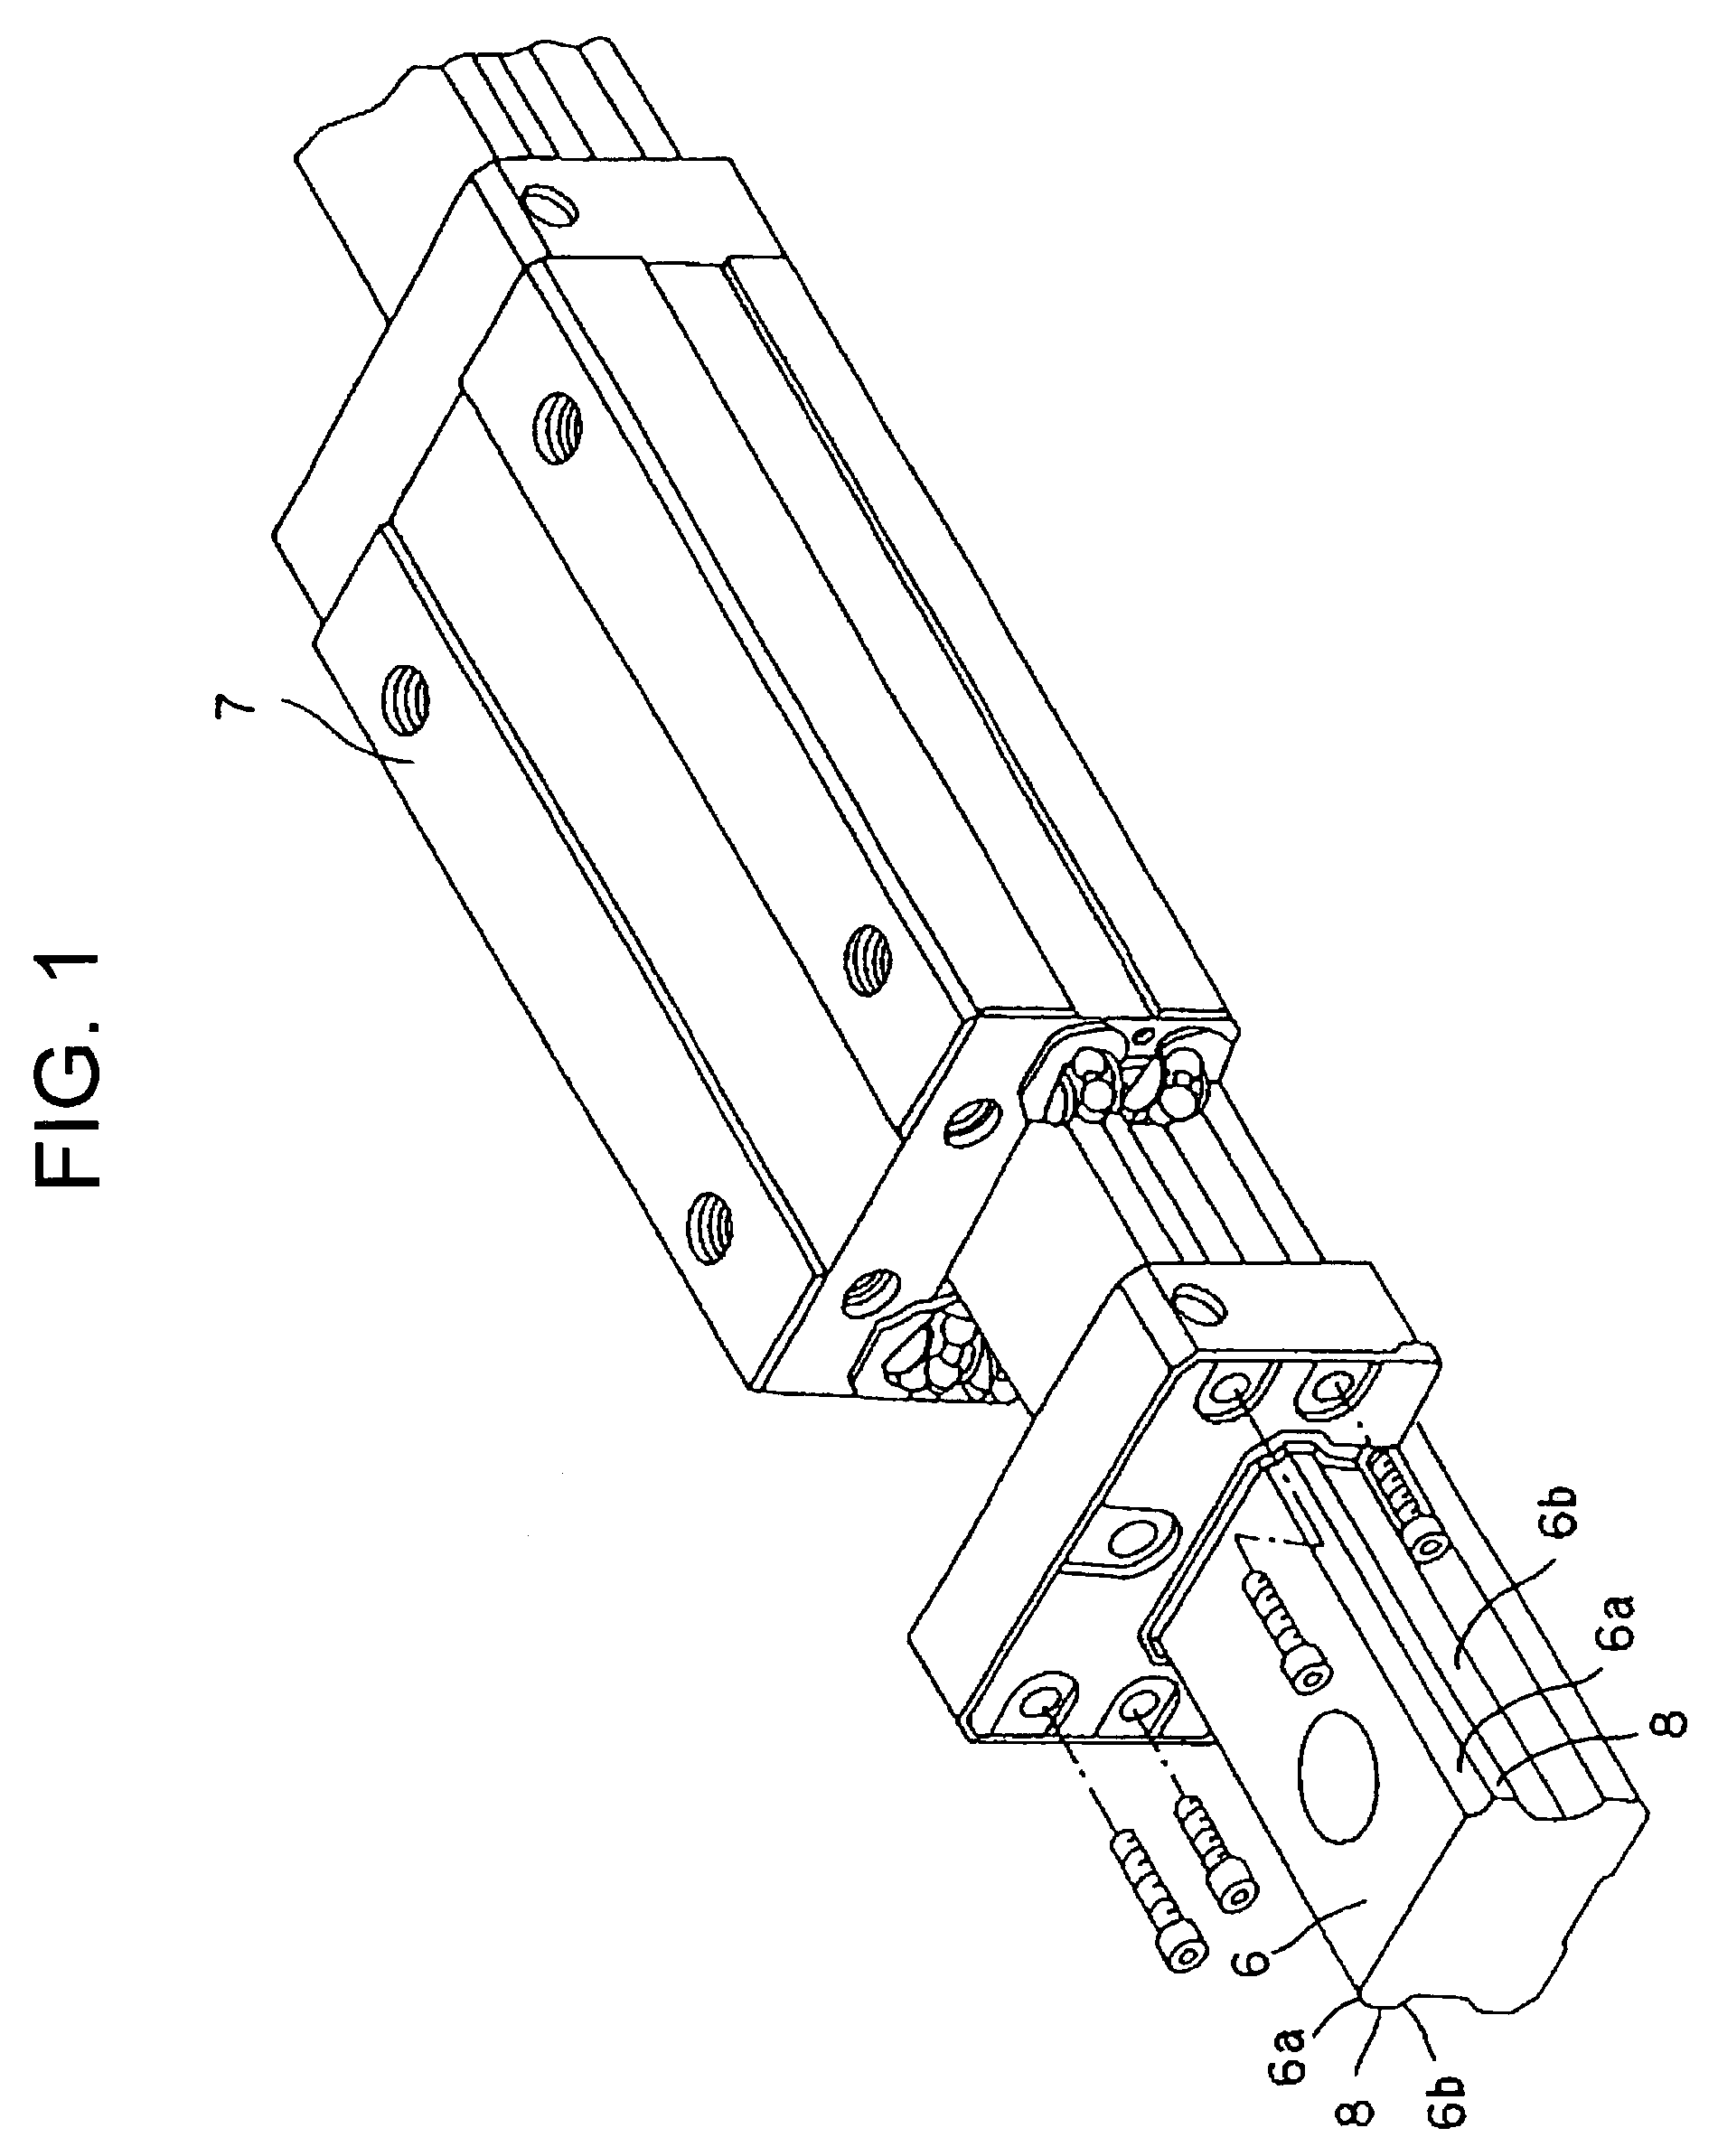 Hardening method and apparatus utilizing laser beams